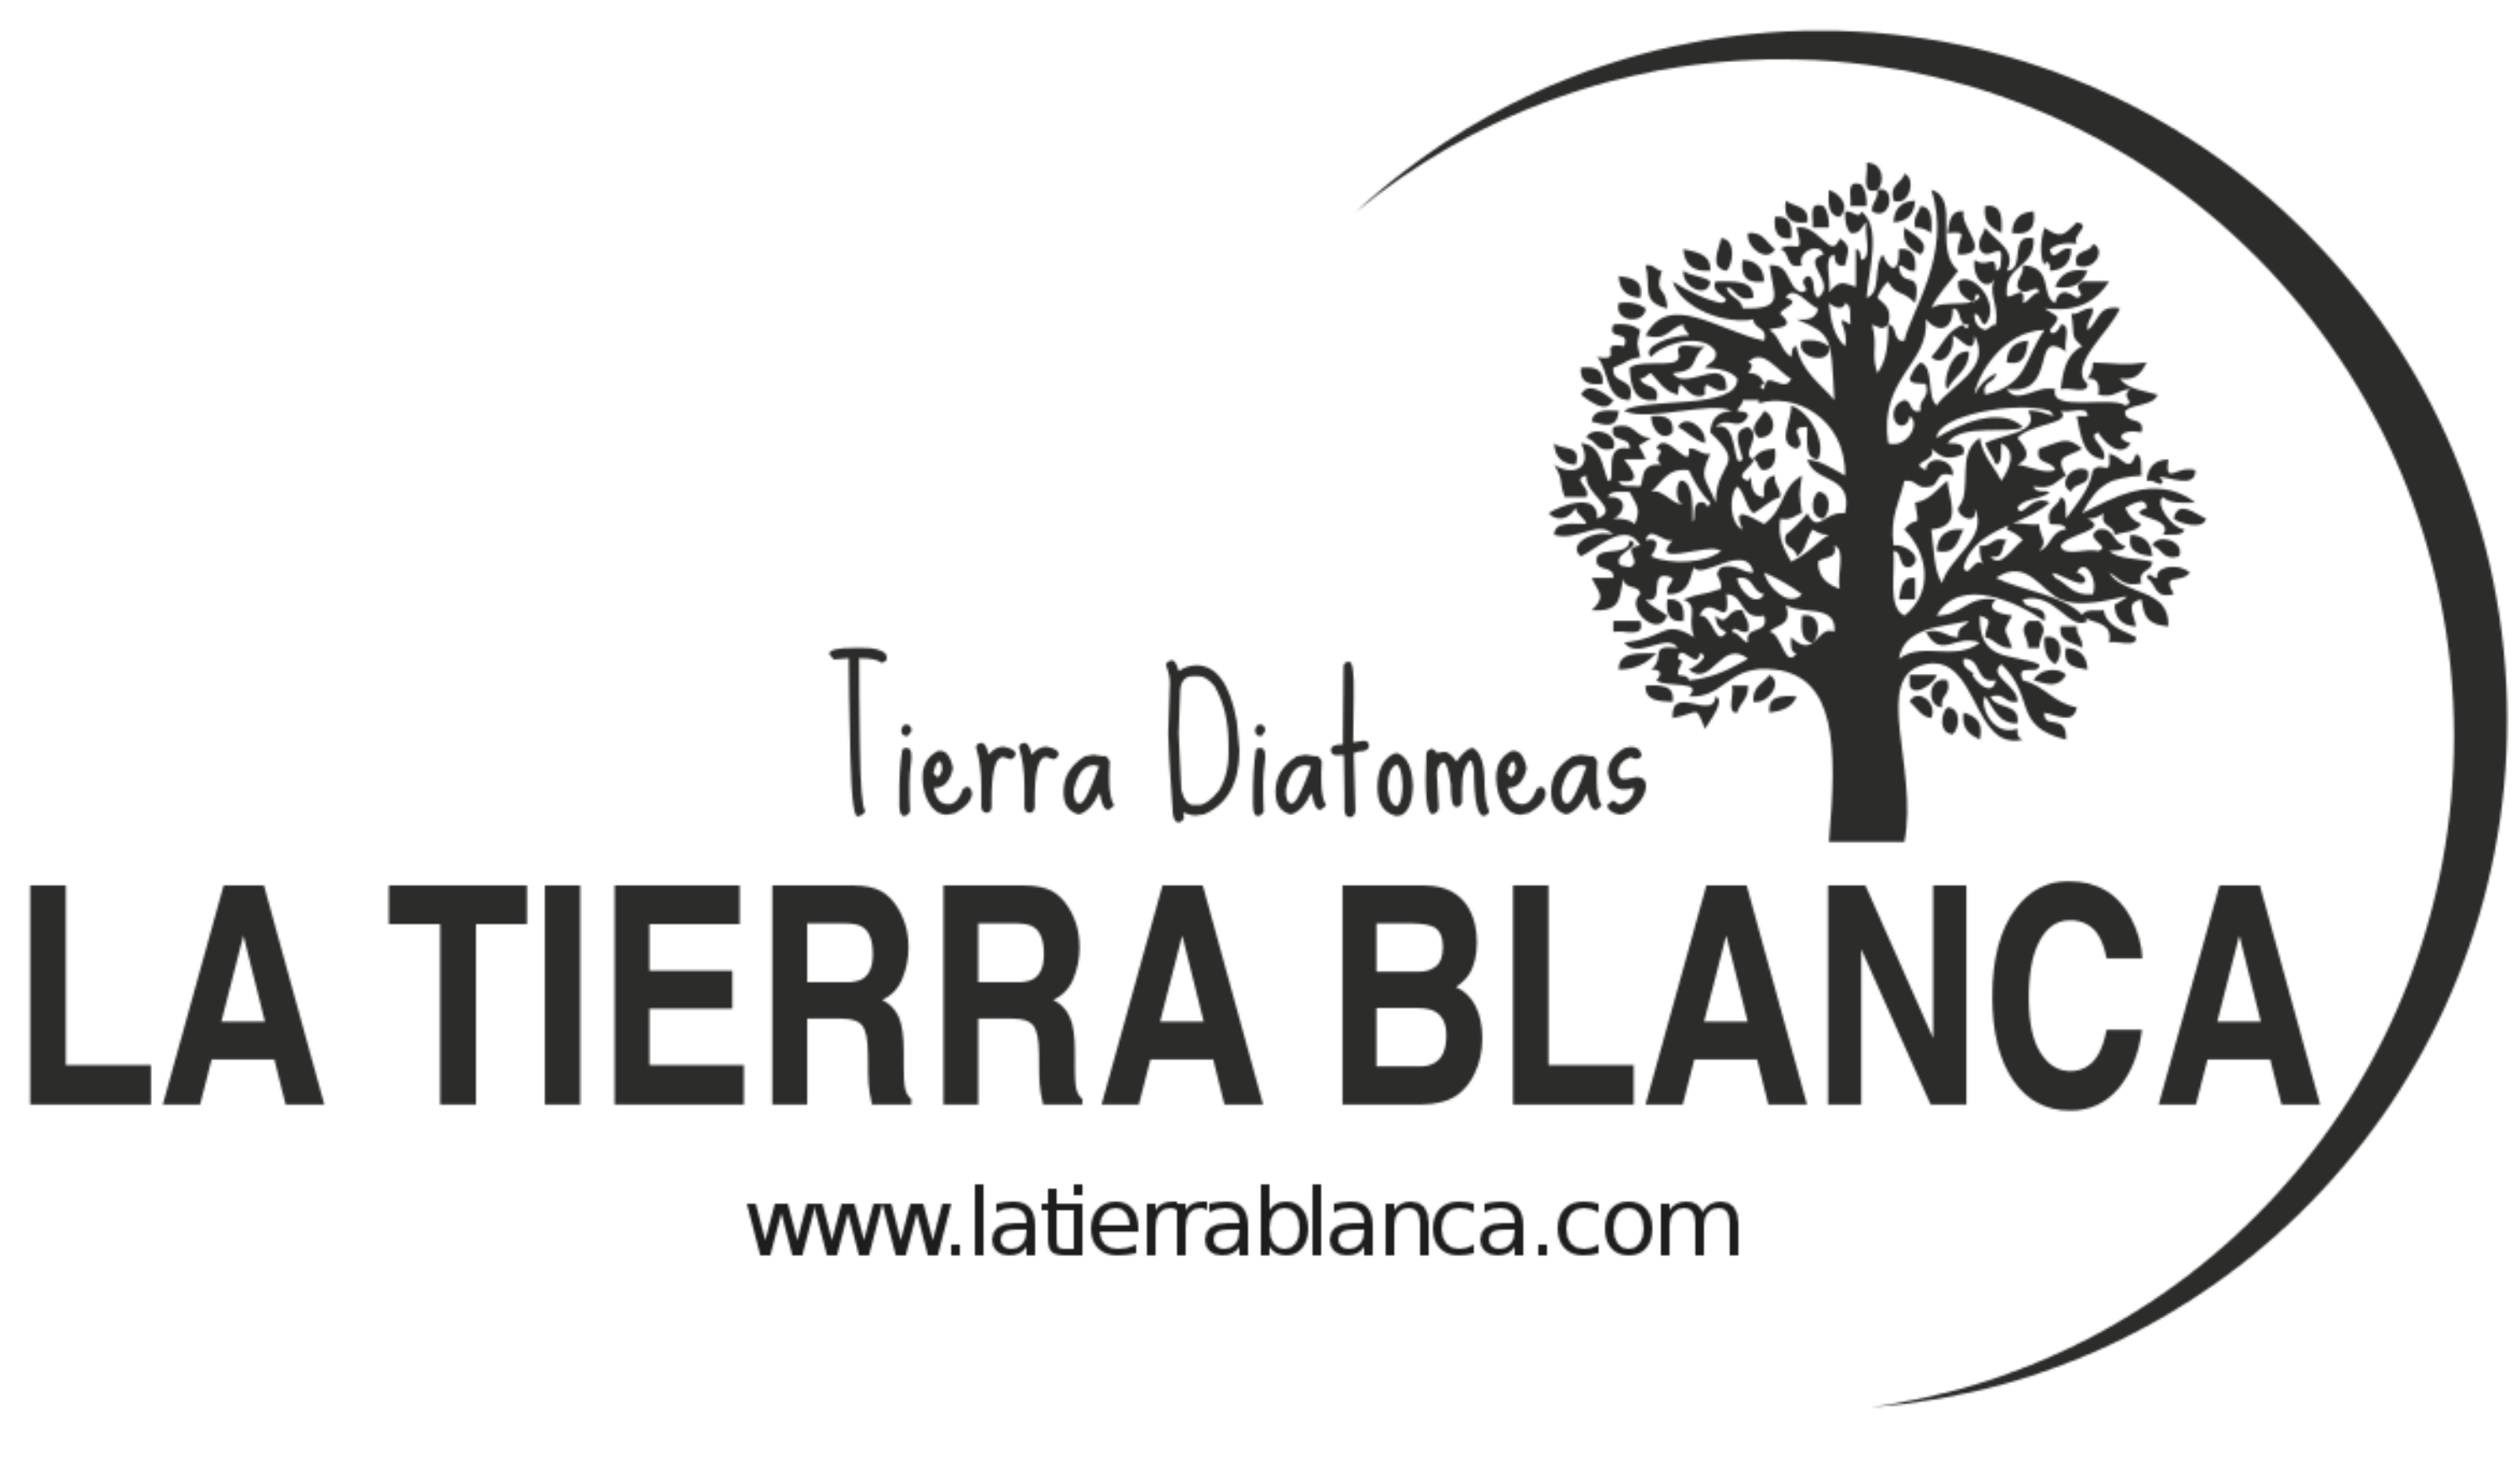 TIERRA DE DIATOMEAS - LA TIERRA BLANCA